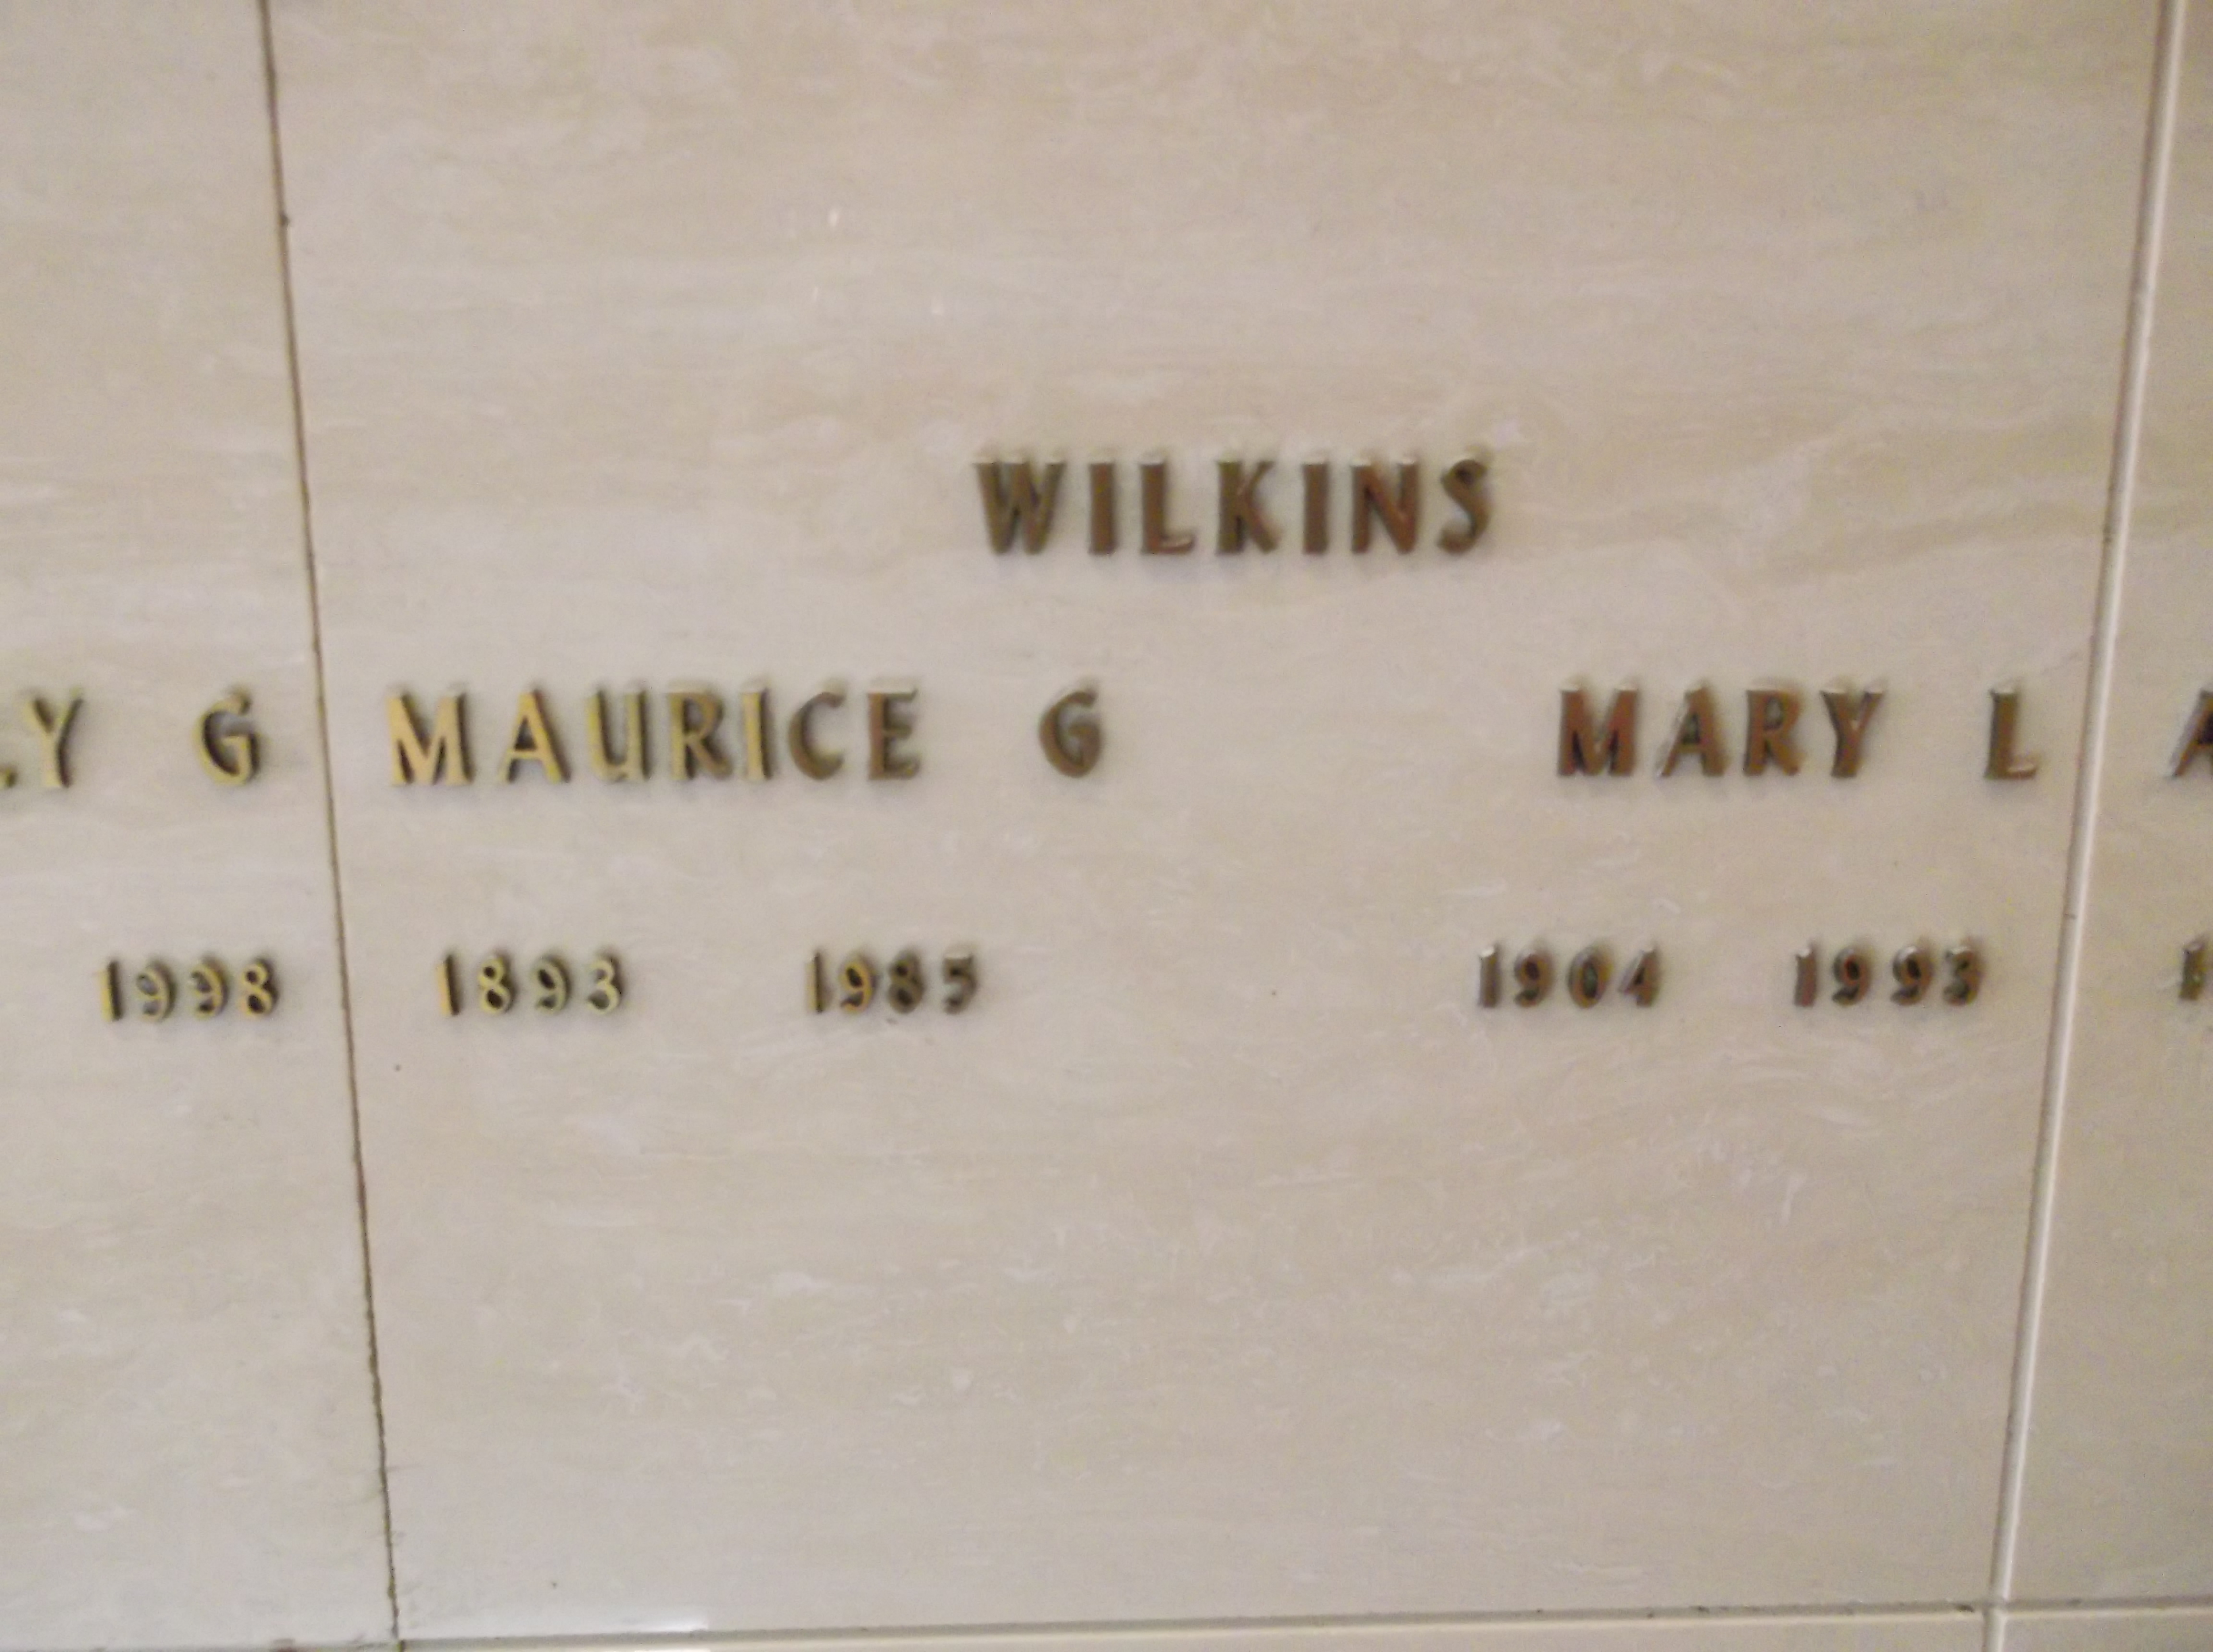 Maurice G Wilkins